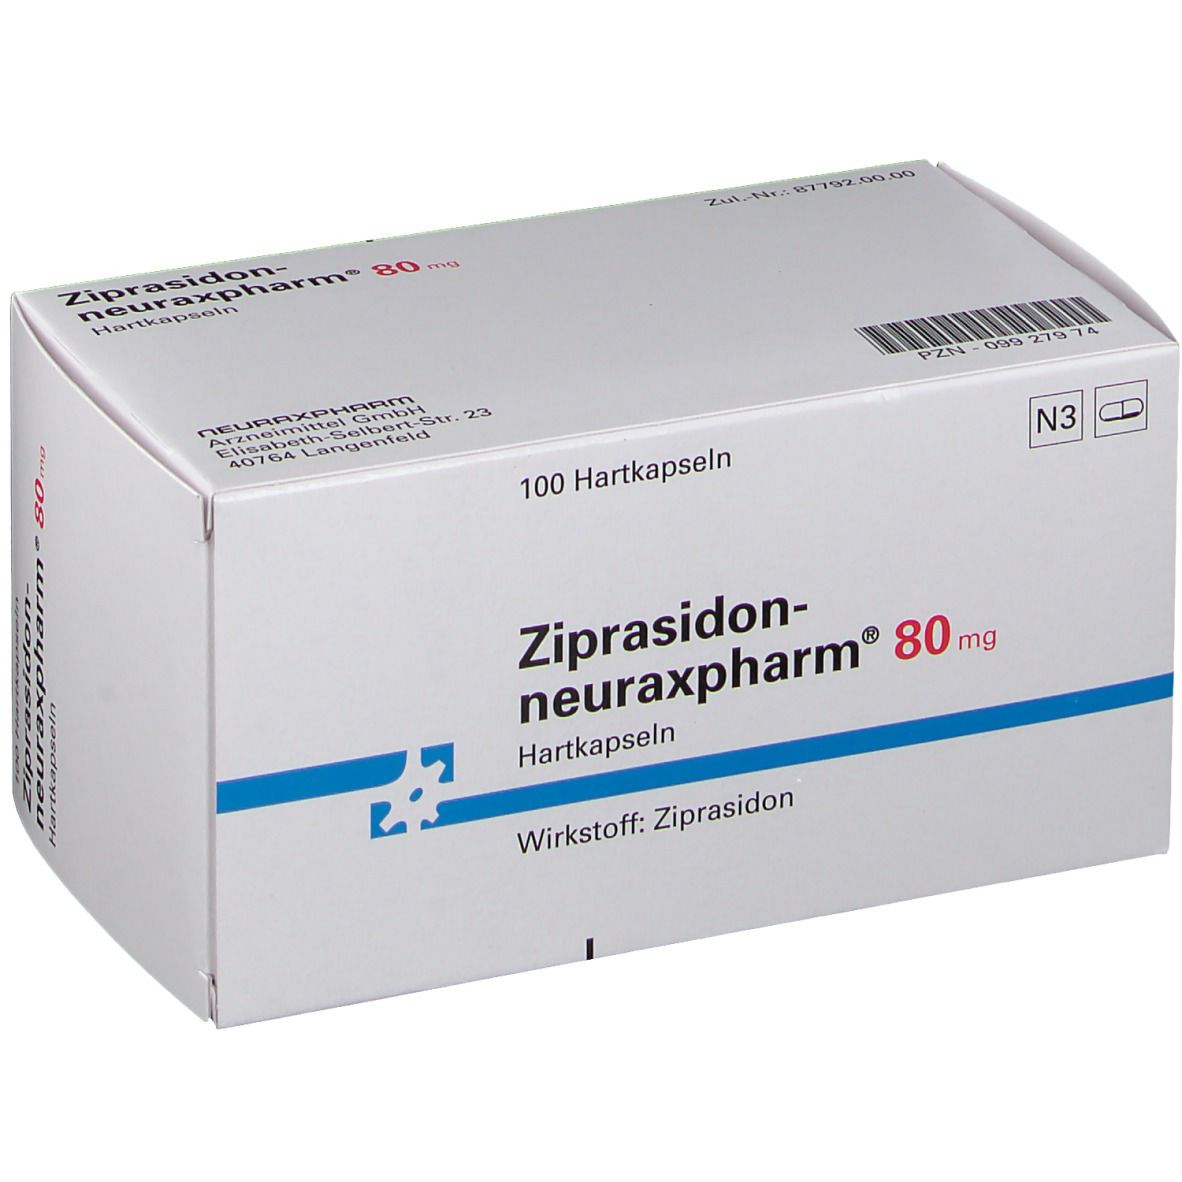 Ziprasidon-neuraxpharm® 80 mg